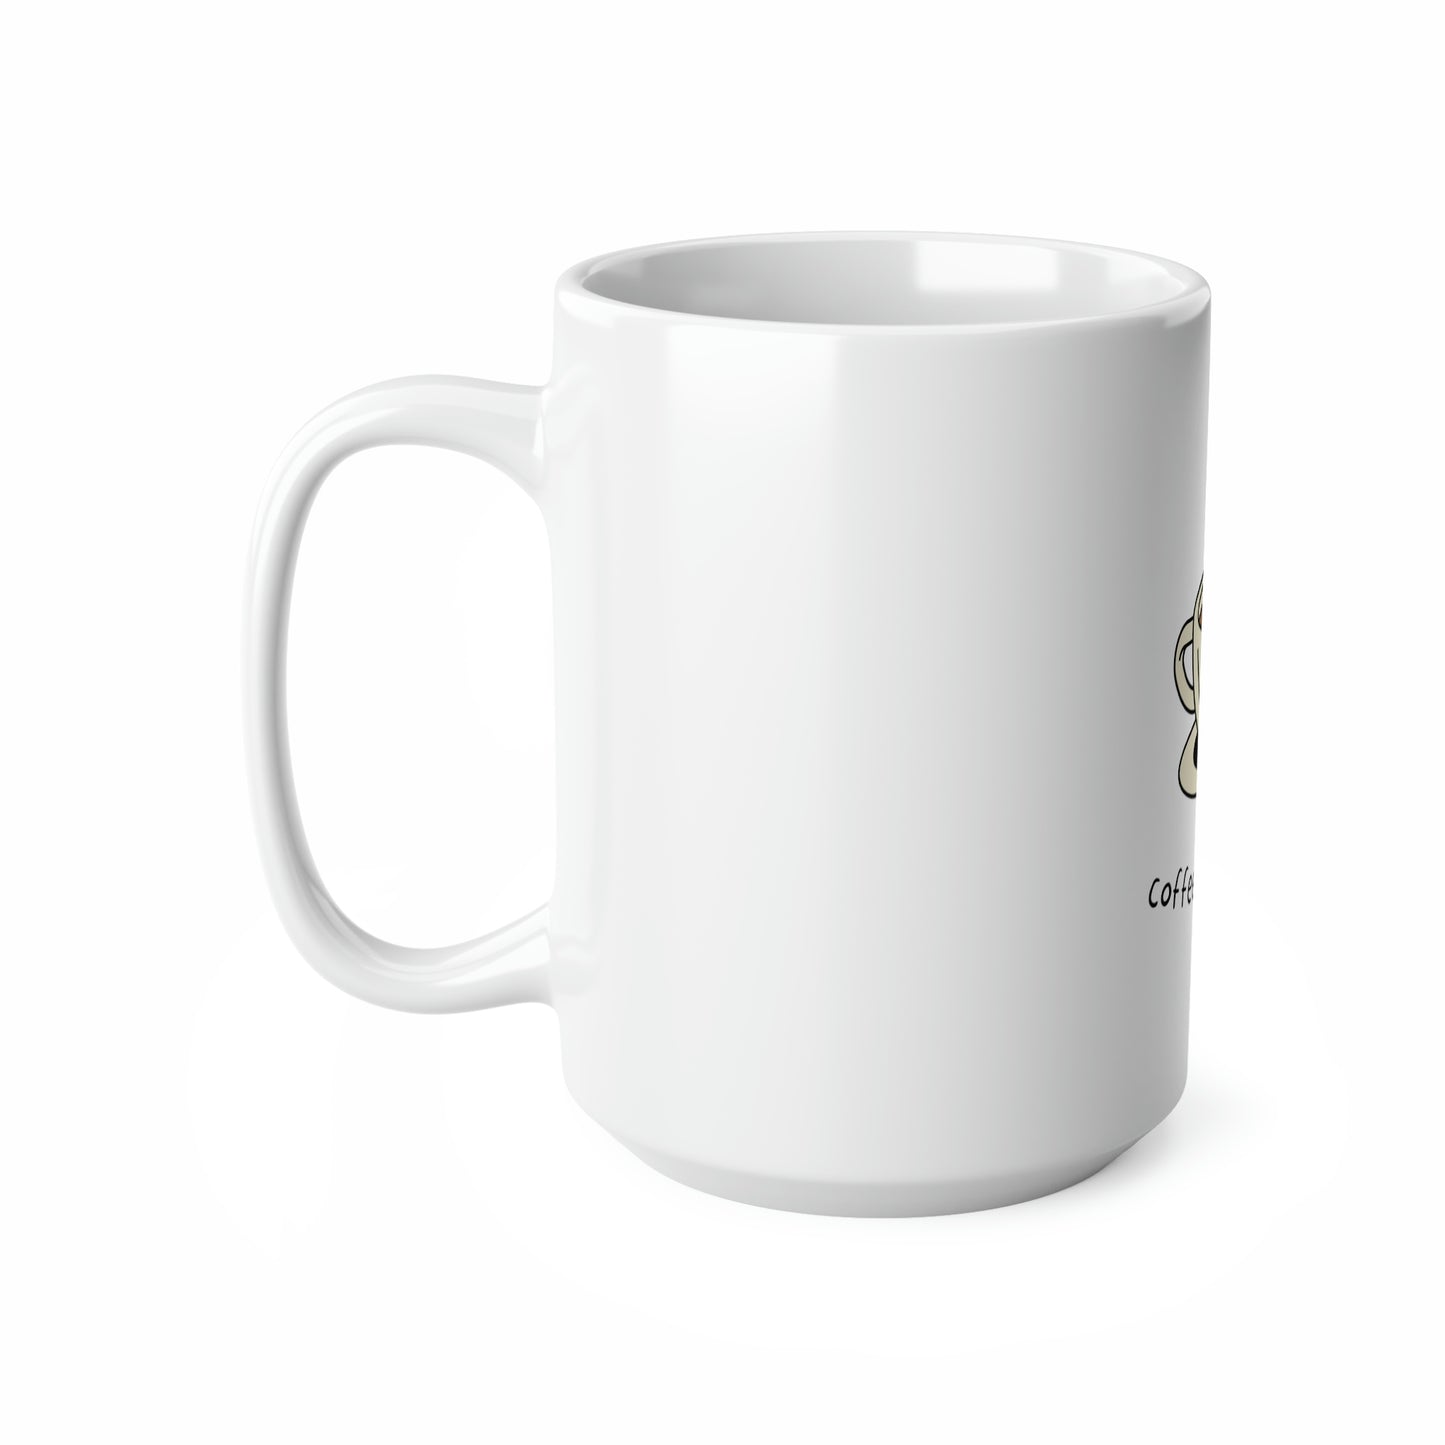 Coffee needs you break Ceramic Coffee Cups, 11oz, 15oz gift funny humor hot drink need work drink mug cute tea small personalized